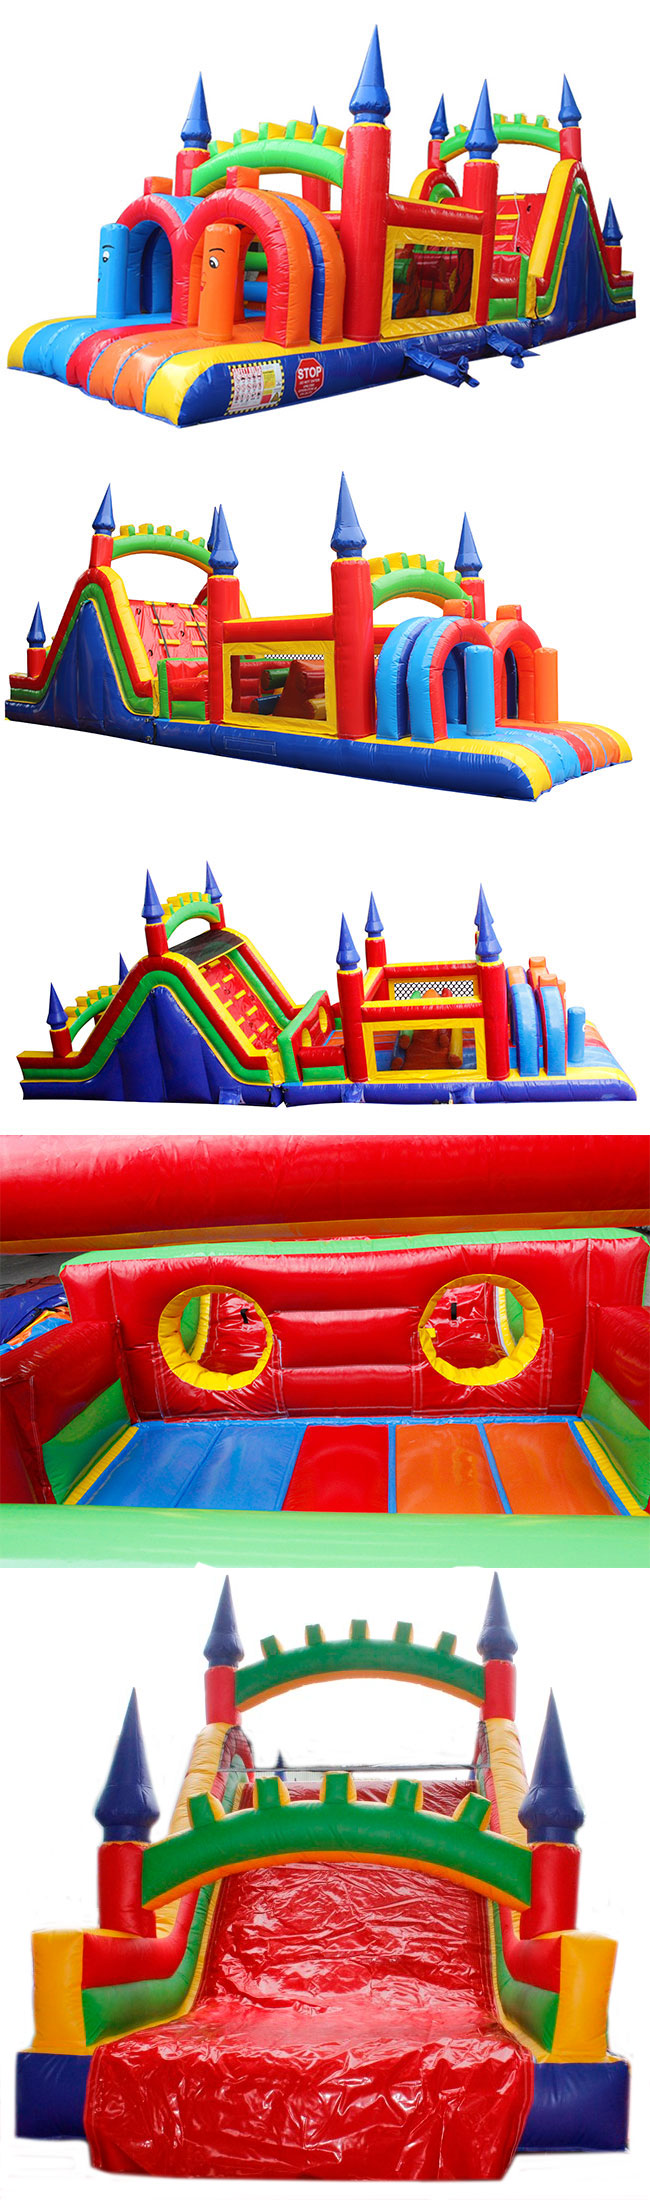 Bouncy Castle Sales - OC27 - Bouncy Inflatable